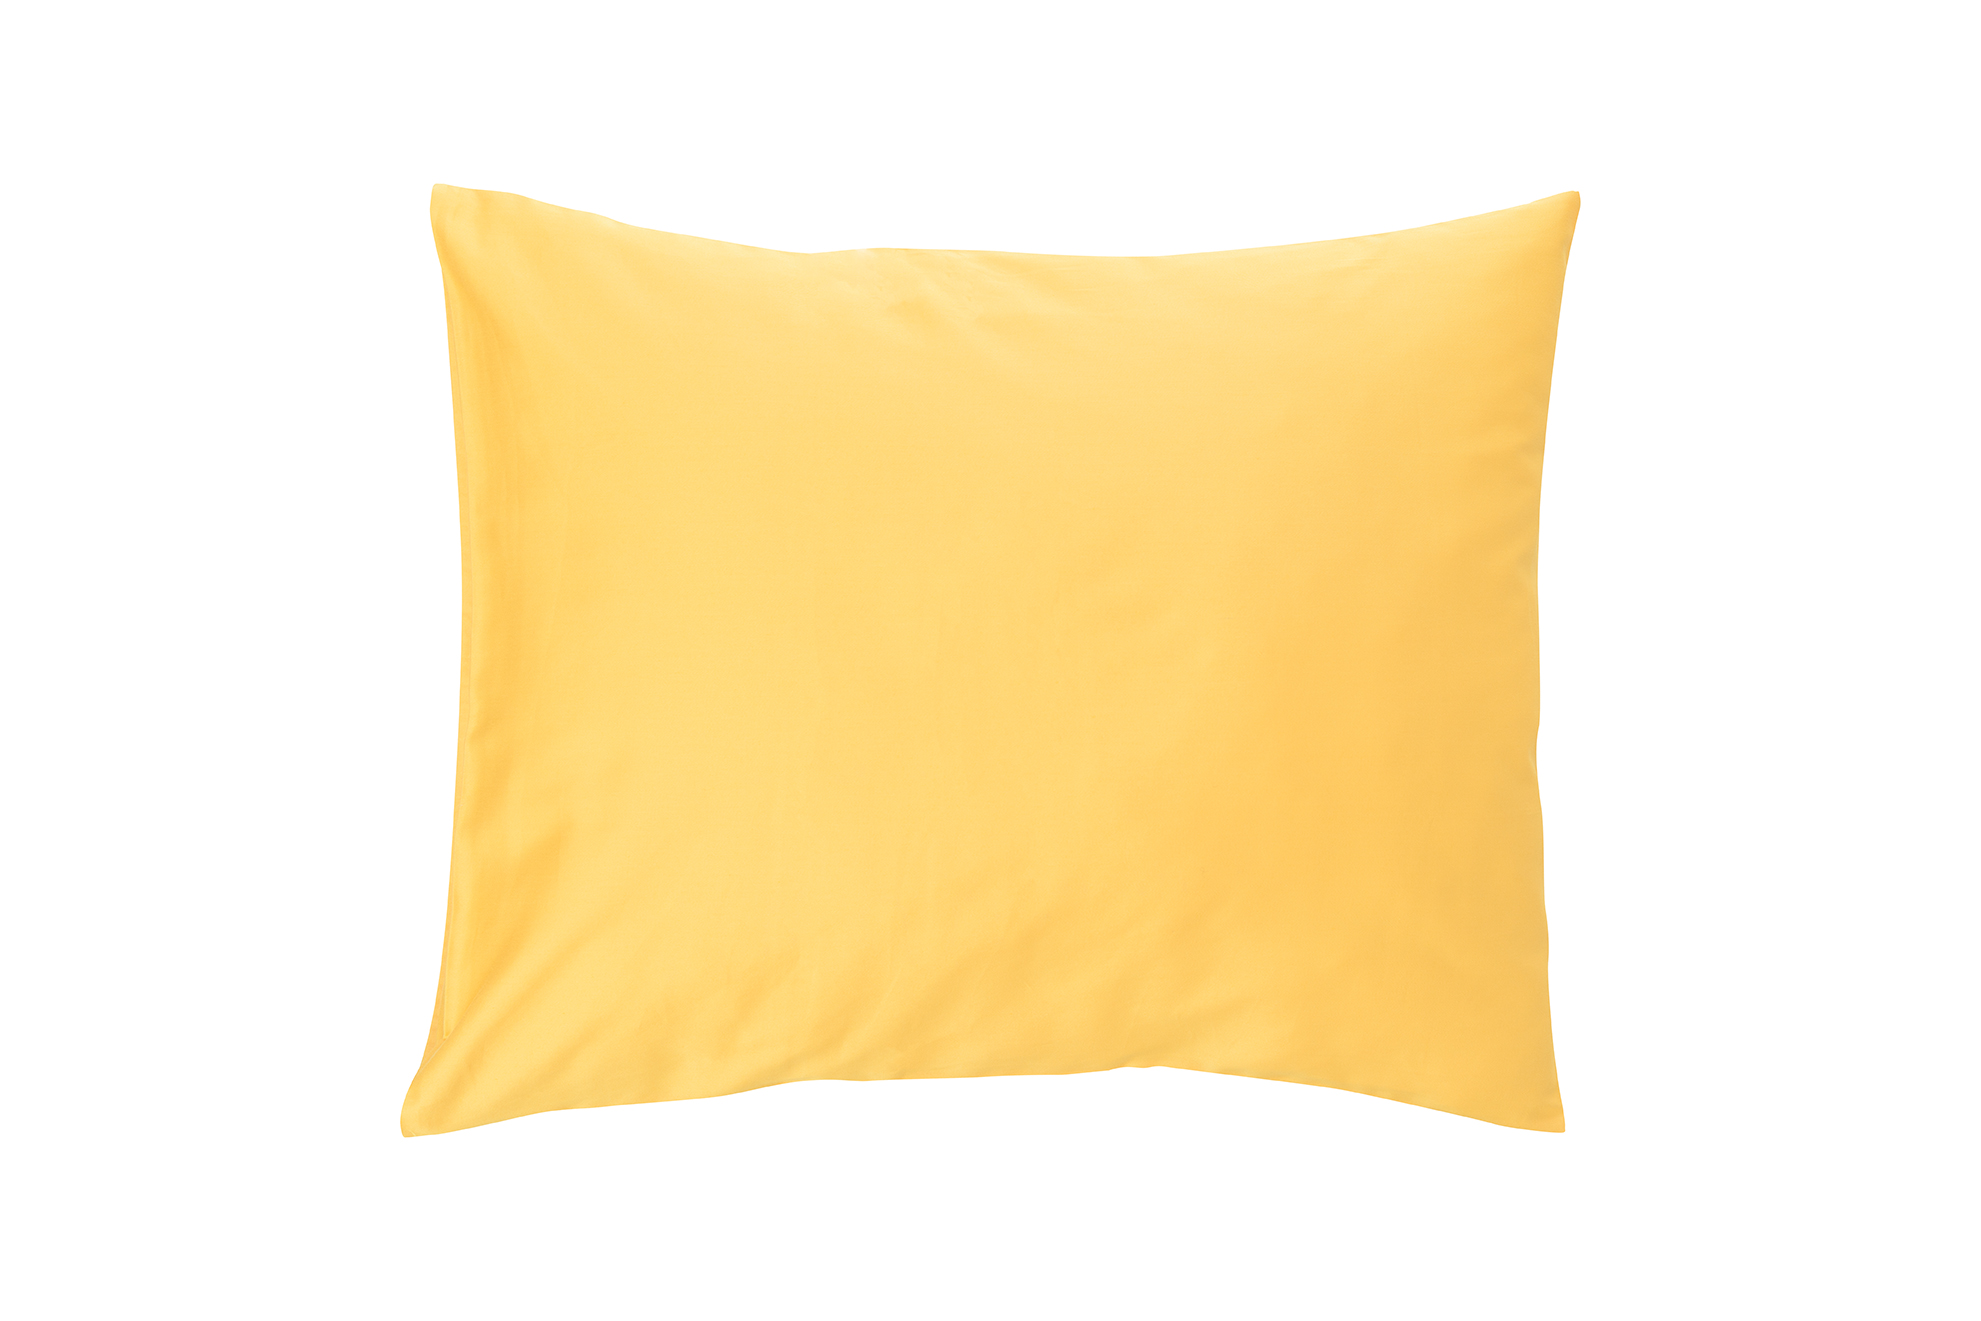 Pillowcase-yellow-.jpg